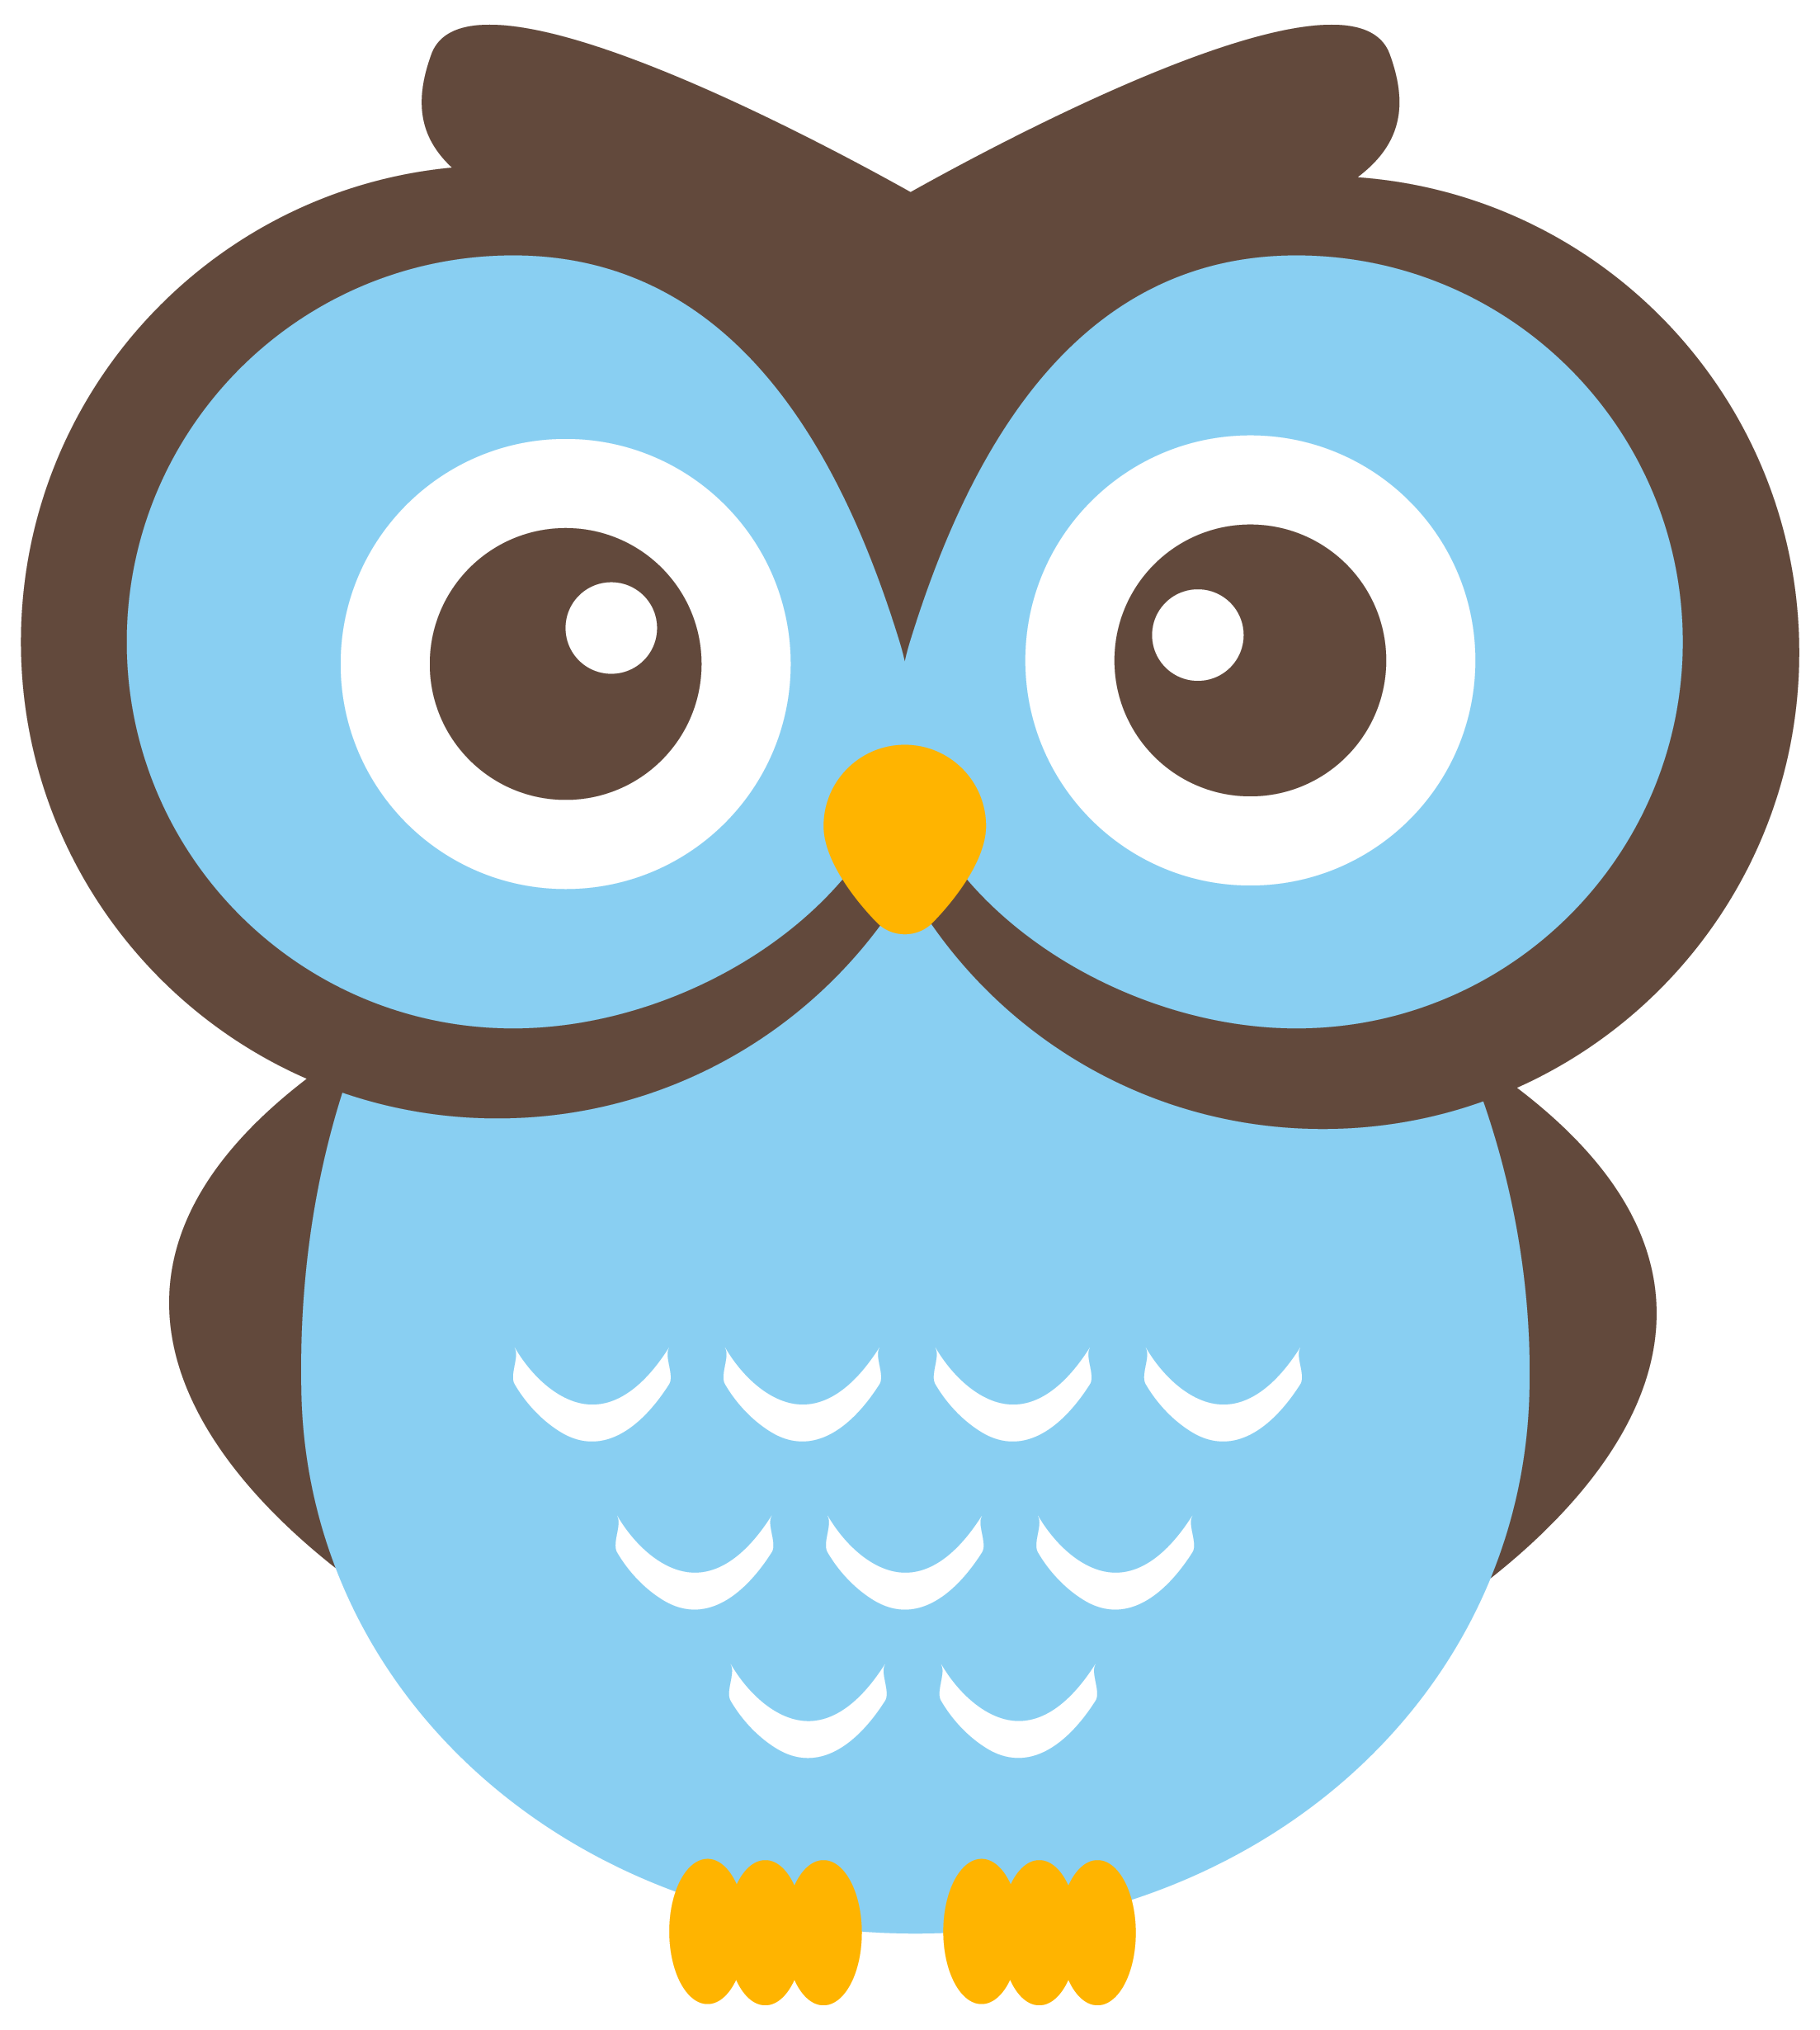 Free cartoon owl clipart imag - Owl Image Clipart